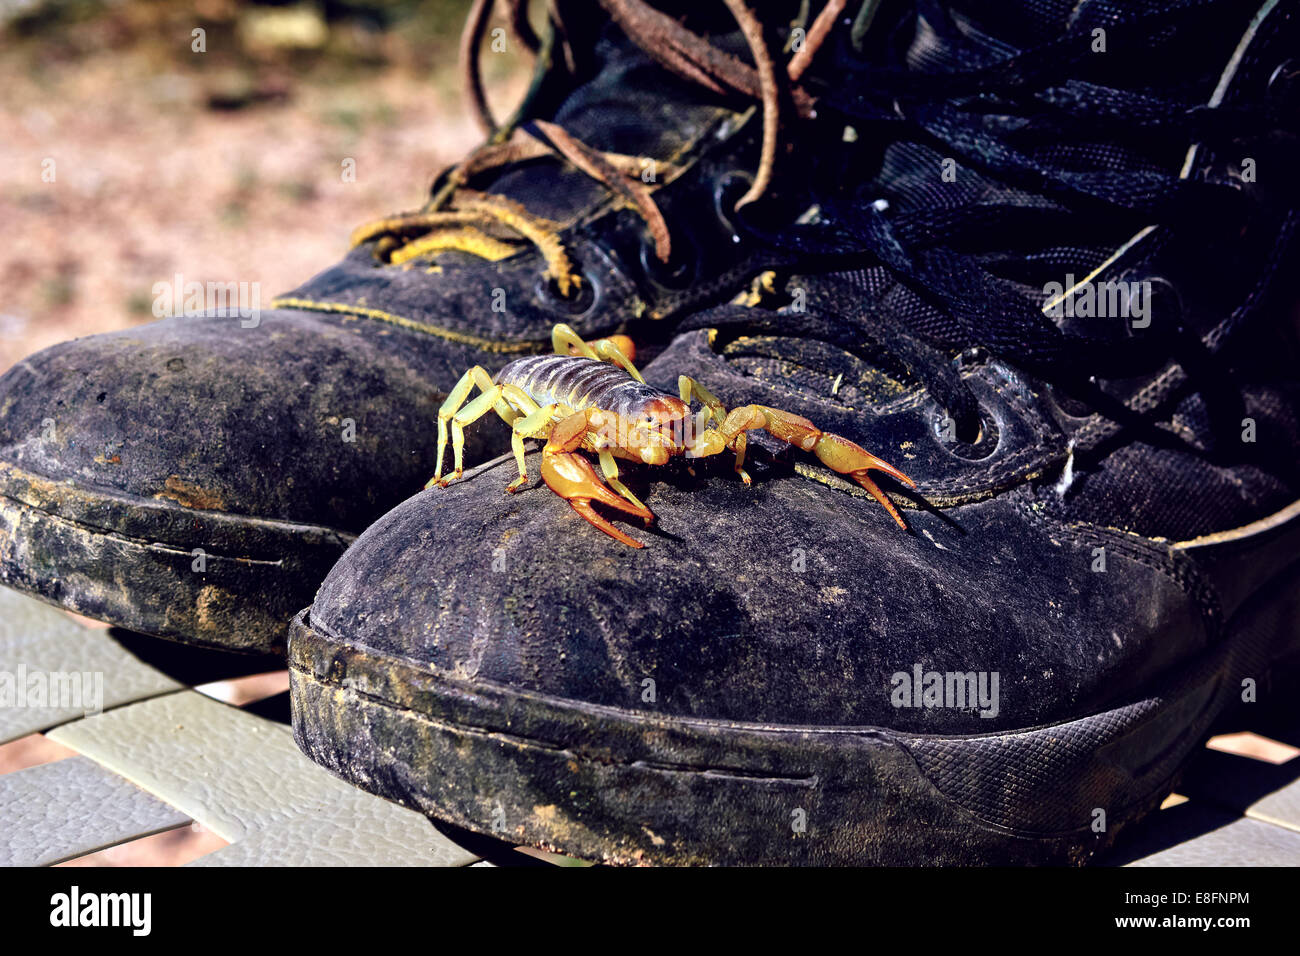 Scorpion (Hadrurus arizonensis) on walking boots, Arizona, United States Stock Photo